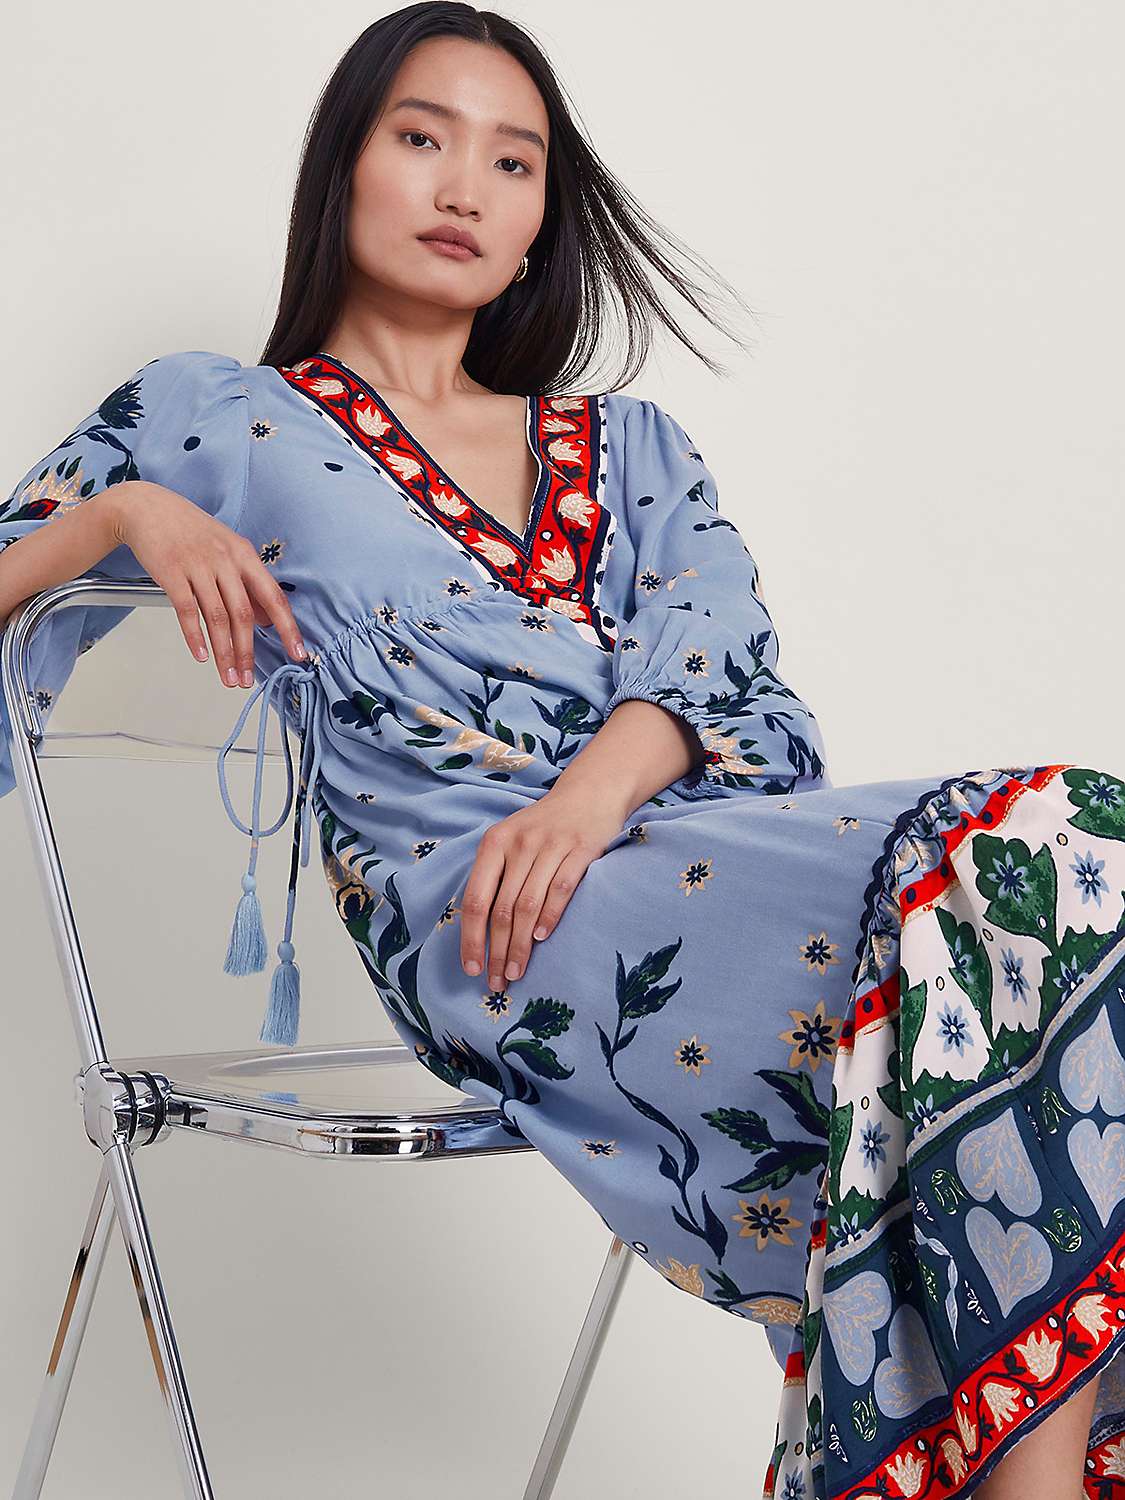 Buy Monsoon Aldina Floral Print Maxi Dress, Blue/Multi Online at johnlewis.com